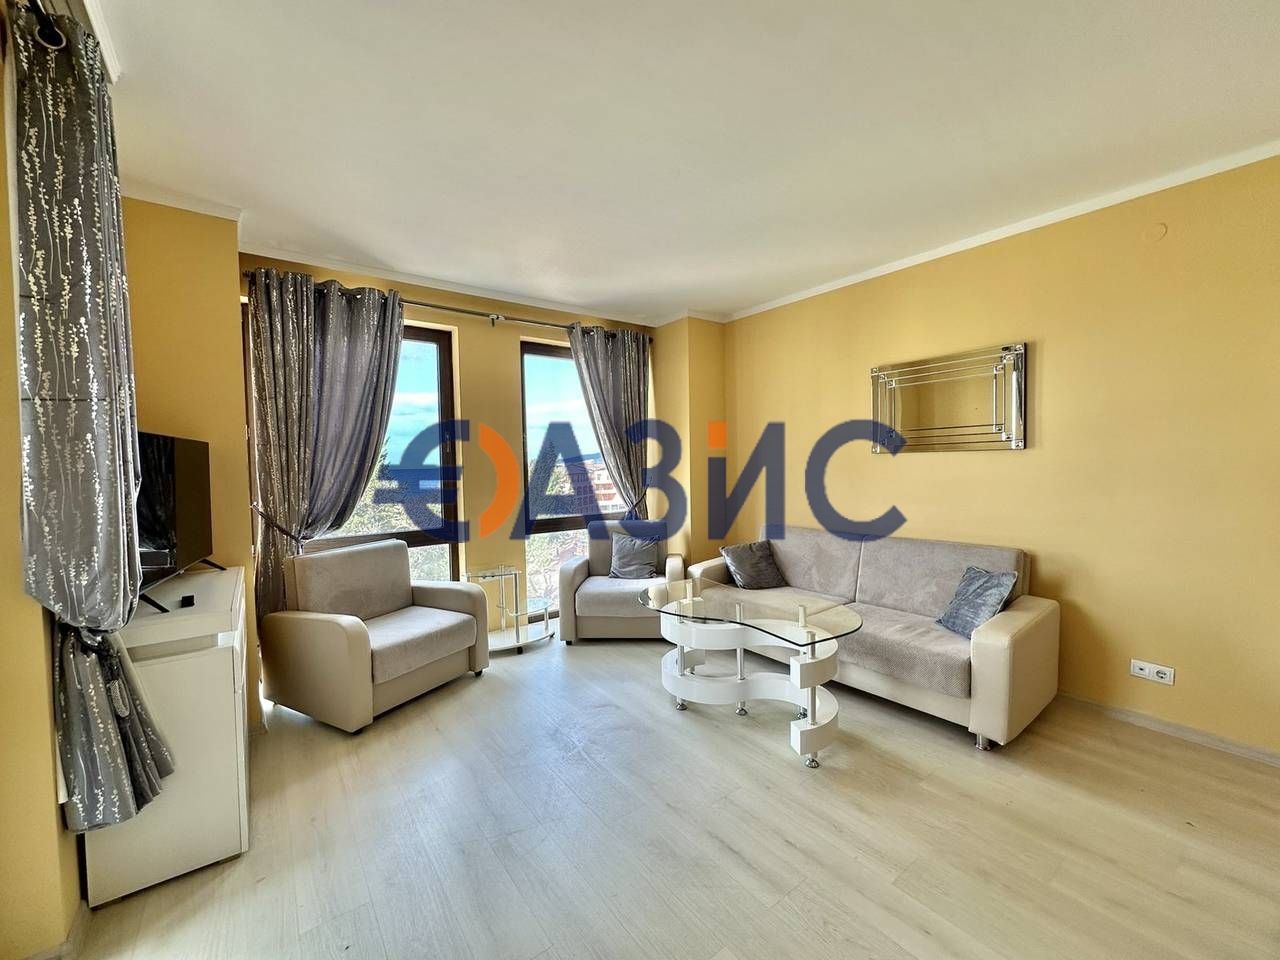 Тристаен апартамент в комплекс Барсело в Слънчев Бряг, България, 105